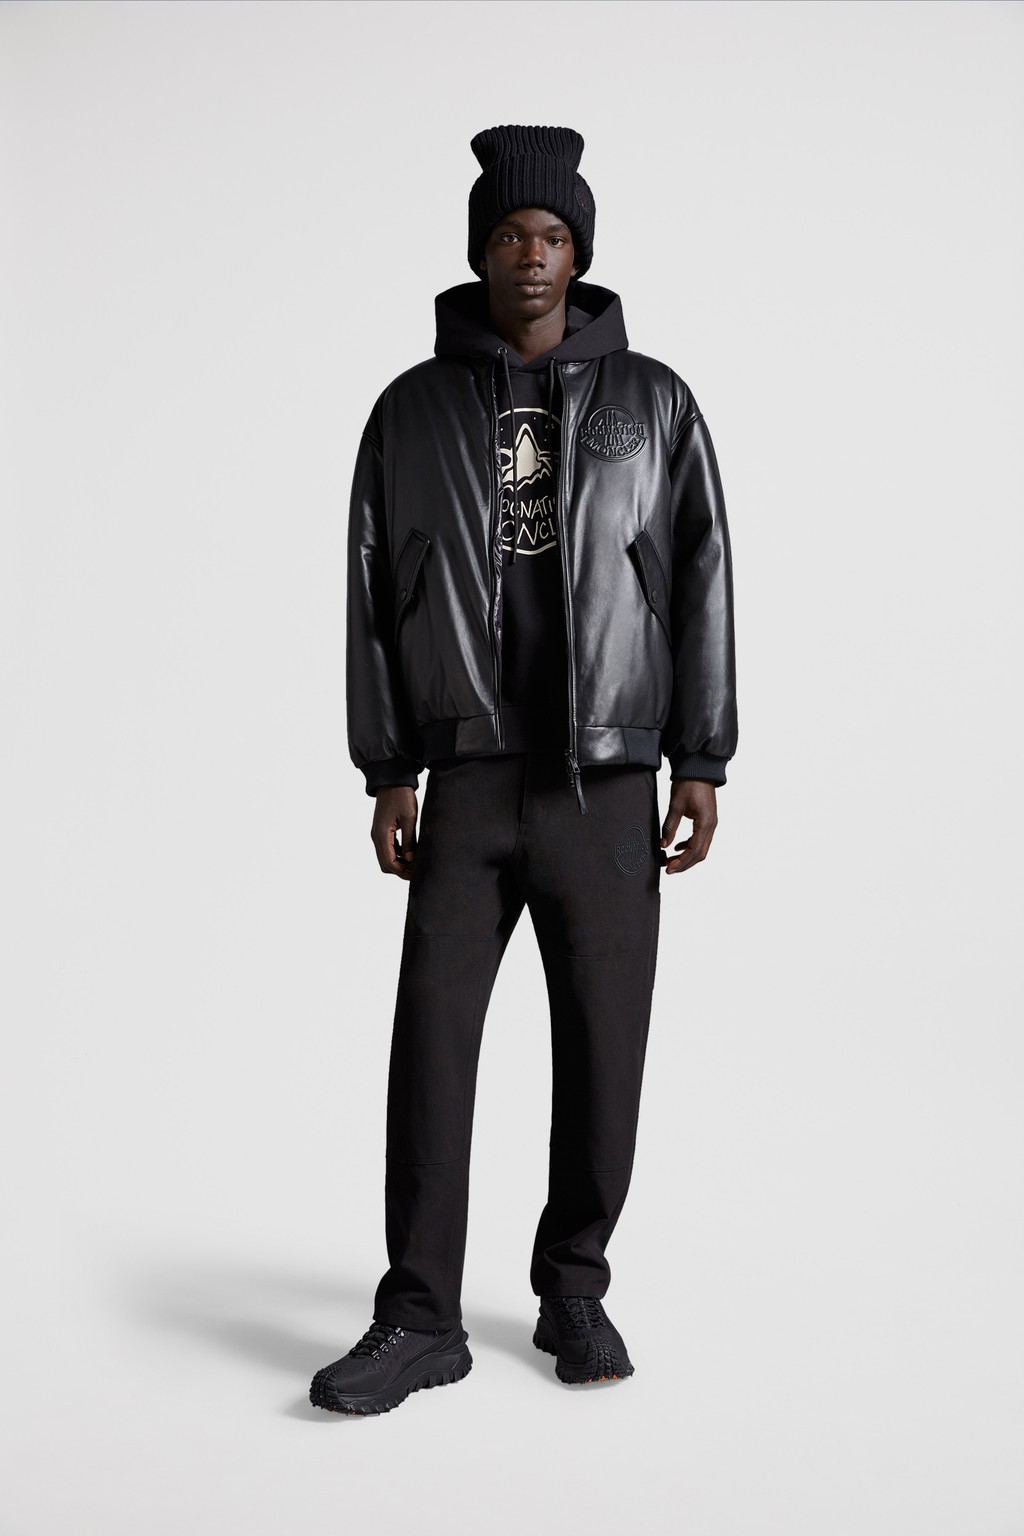 Moncler x Roc Nation designed by Jay-Z for Genius - Shop Genius 